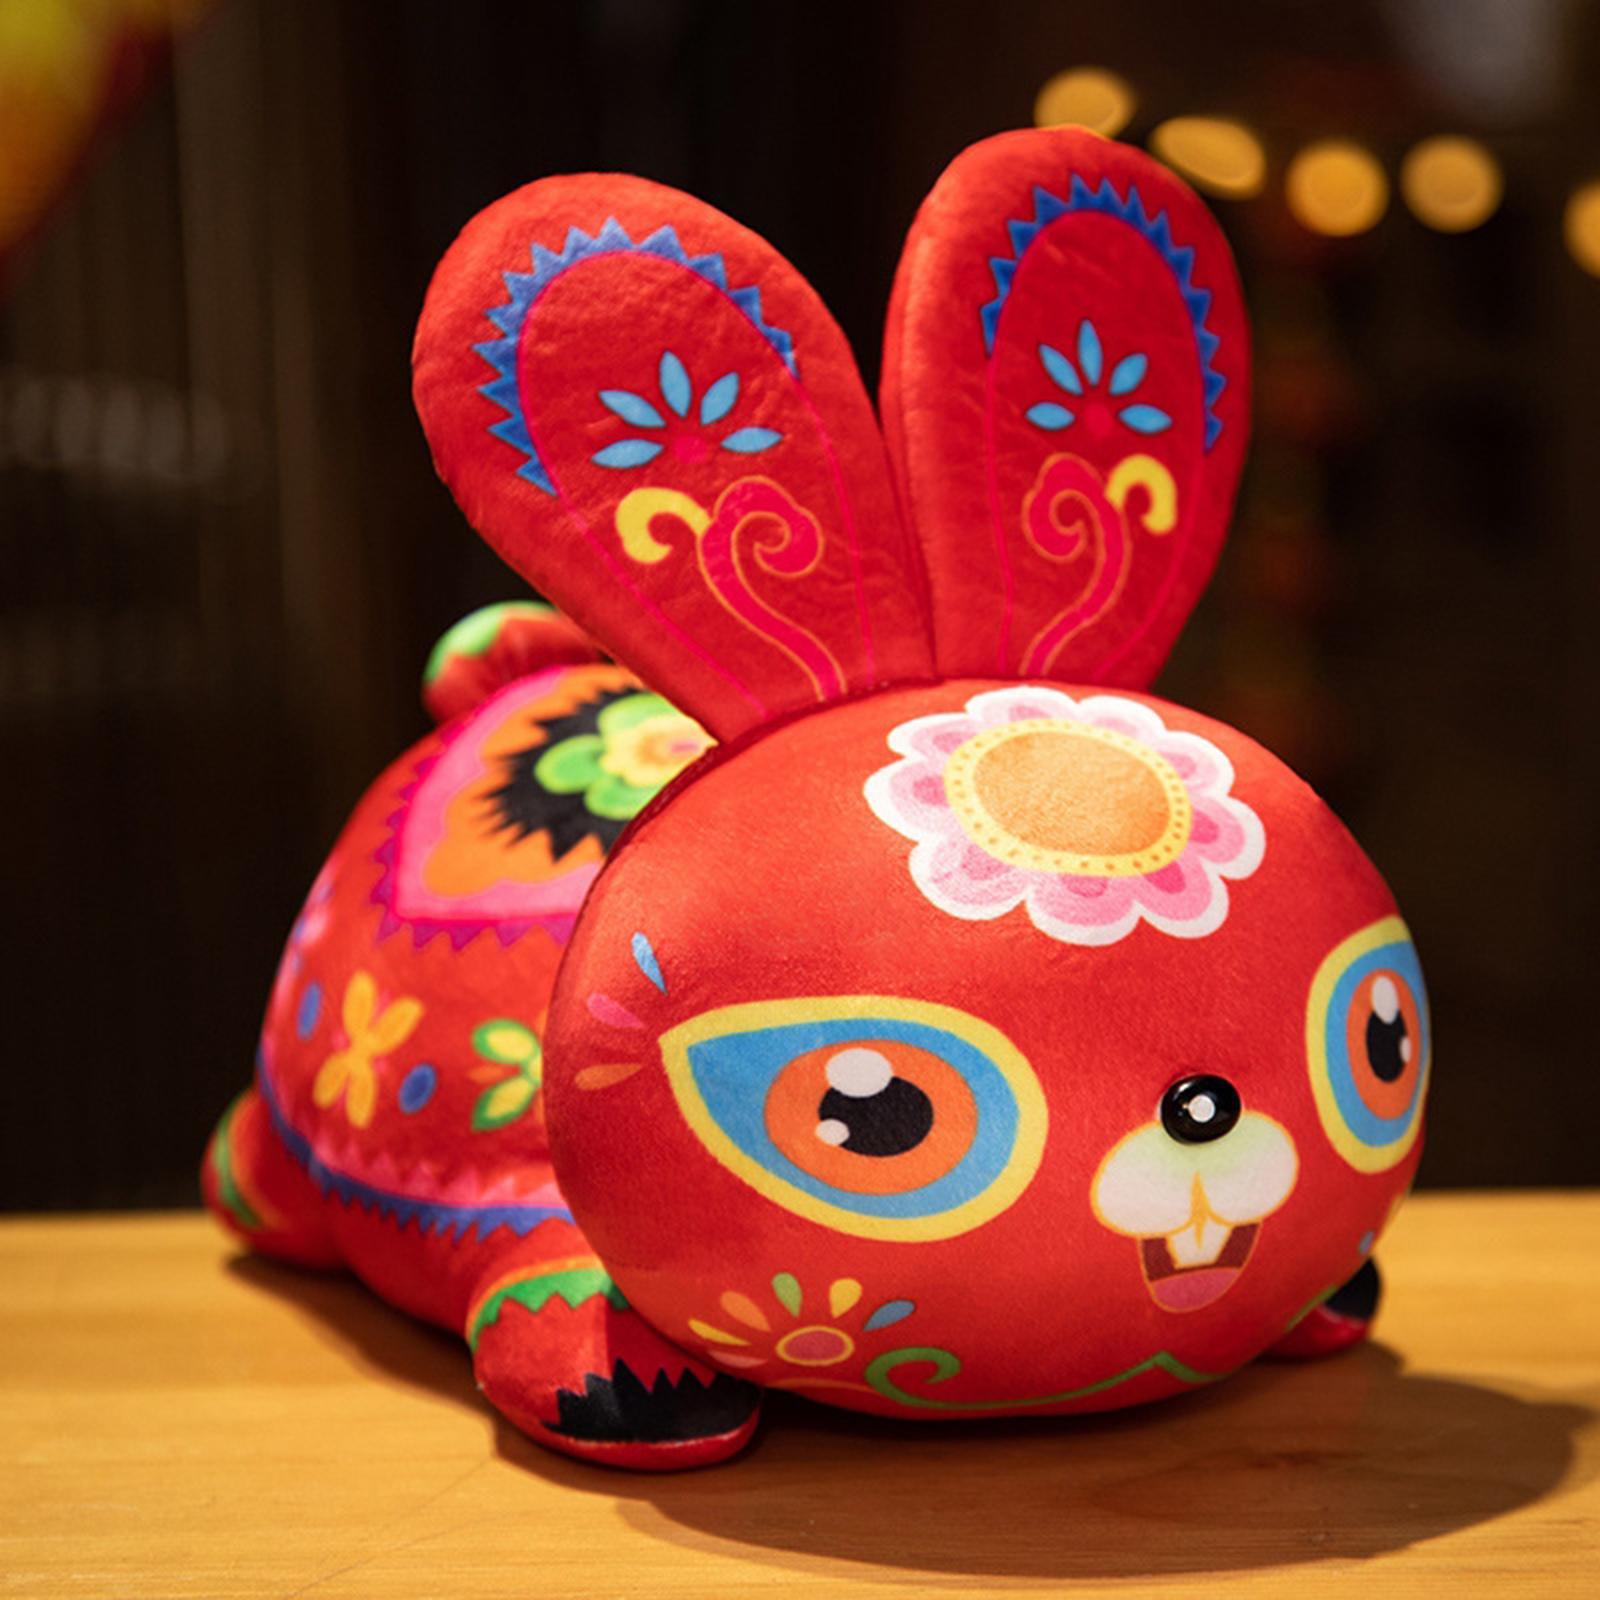 2 Pieces Rabbit Plush Toy Cartoon Ornament Plush Animal Doll for New Year